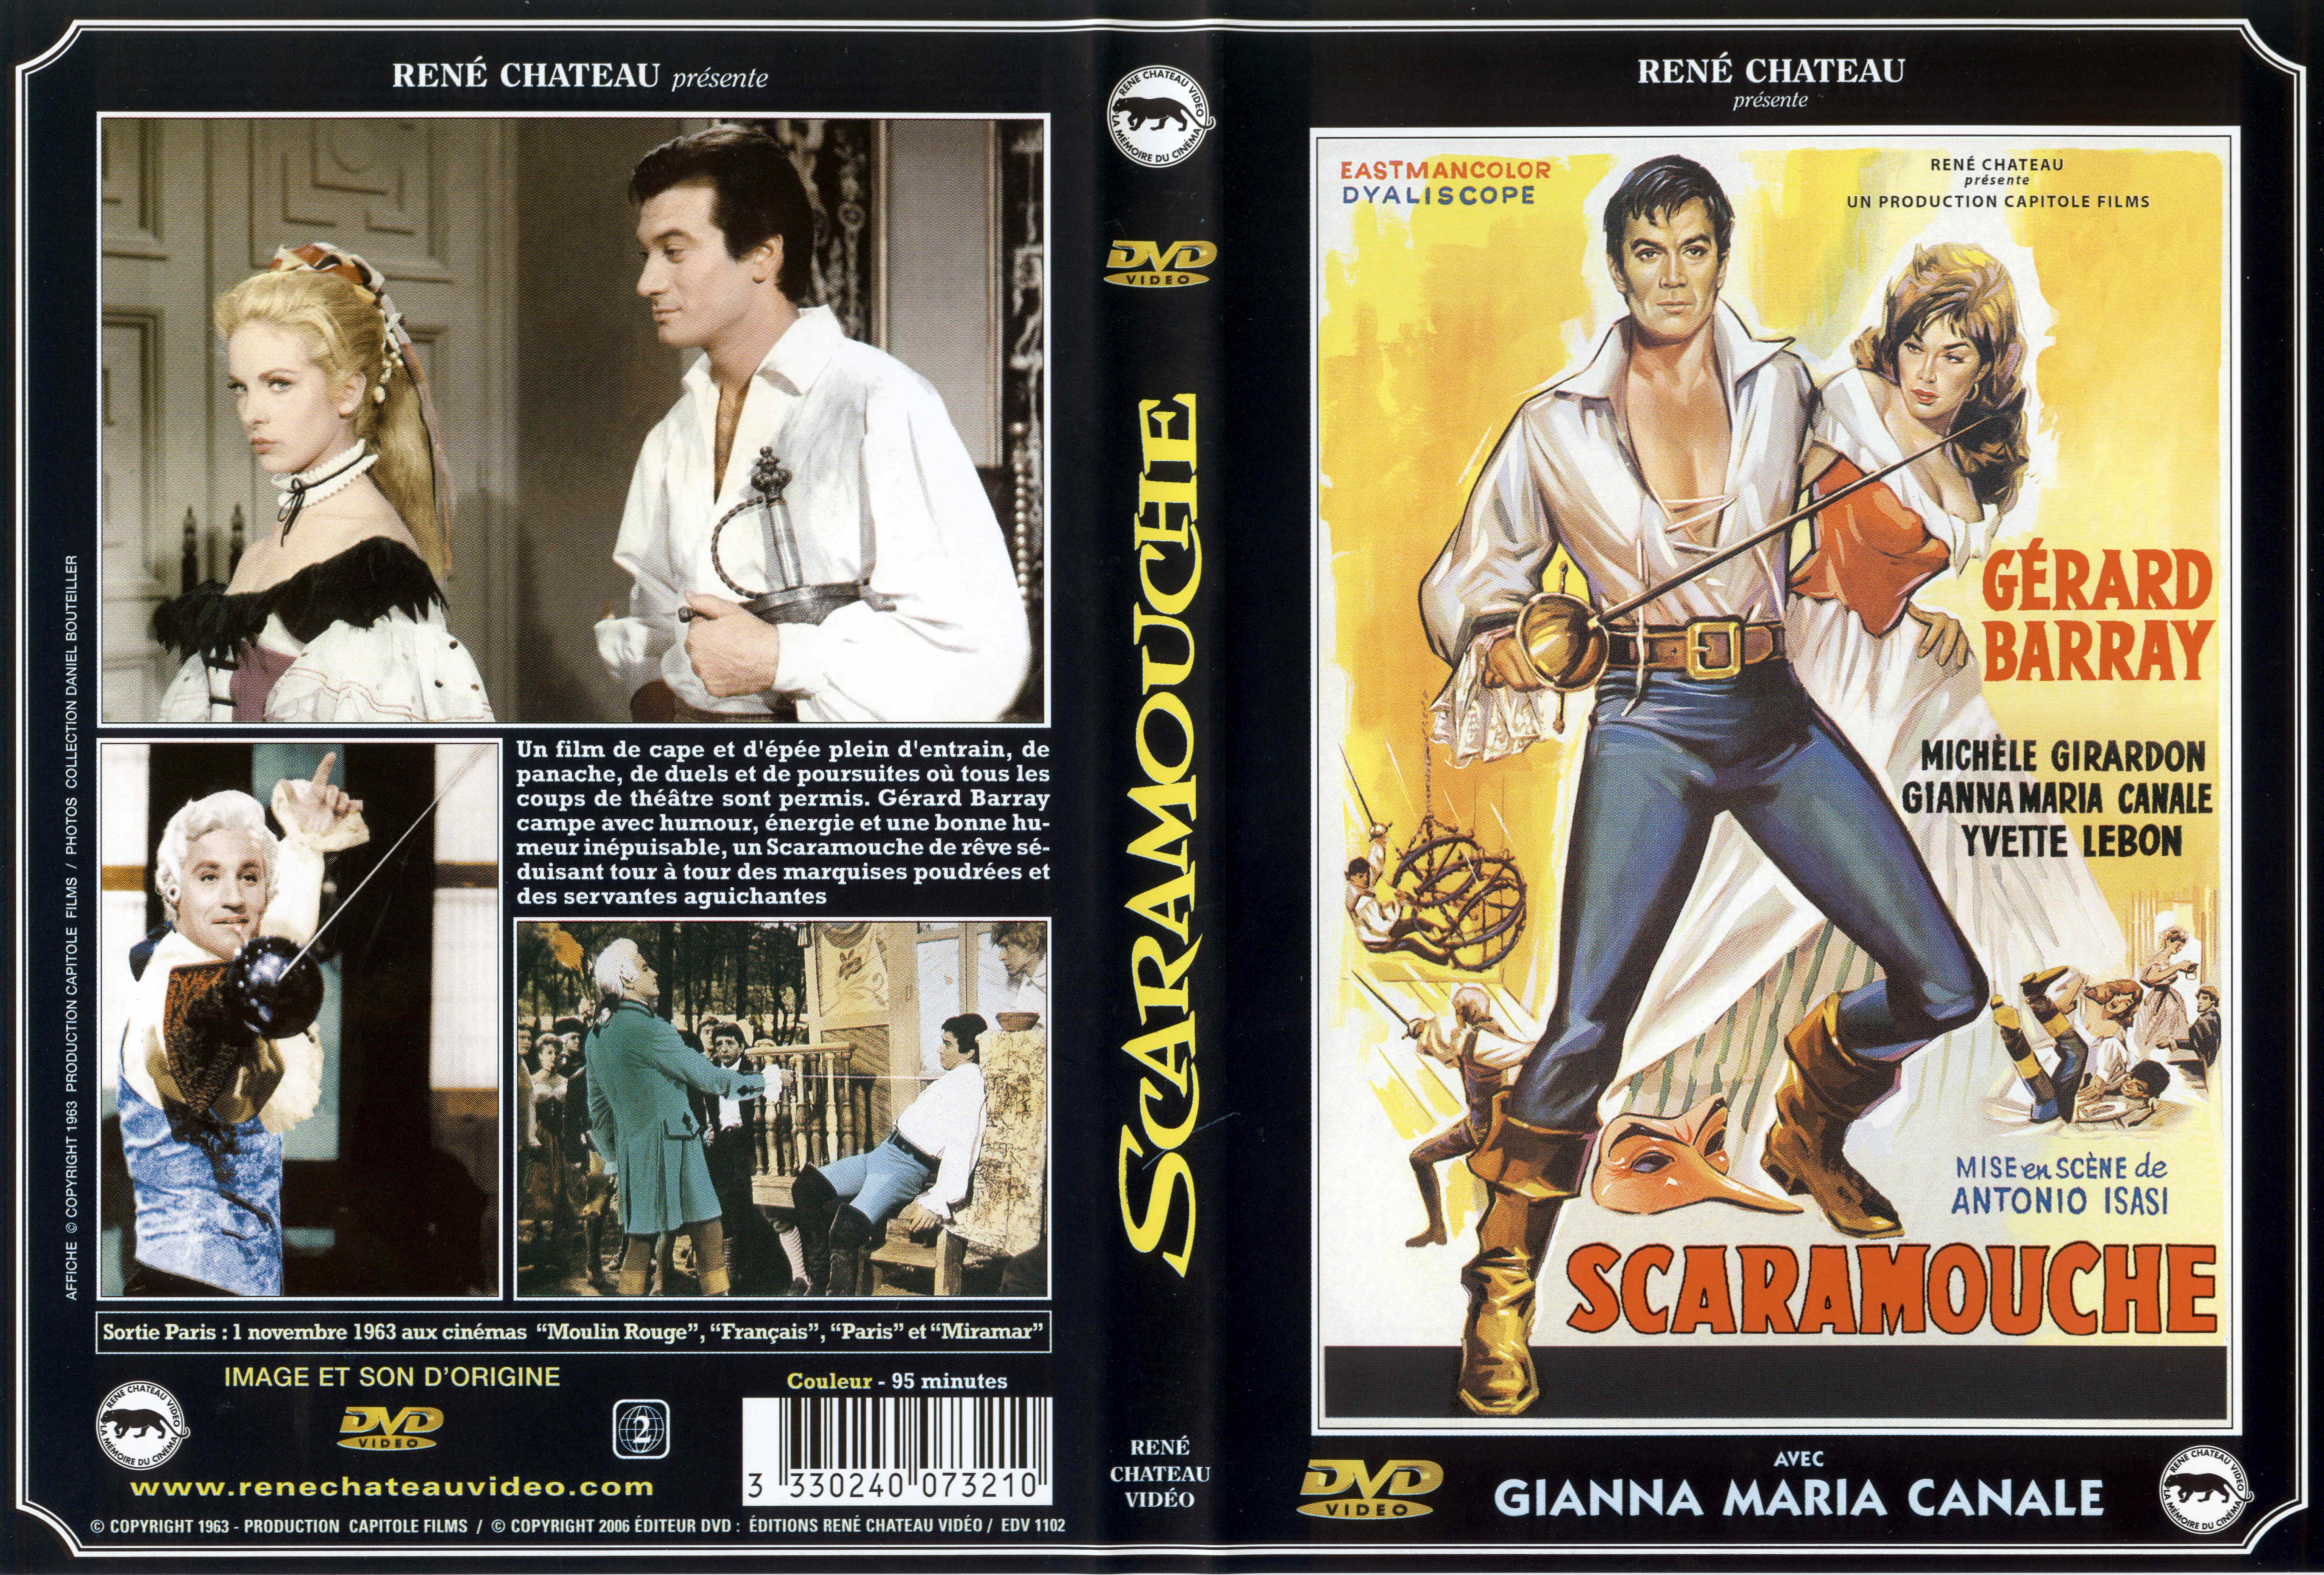 Jaquette DVD Scaramouche (Gerard Barray) v2